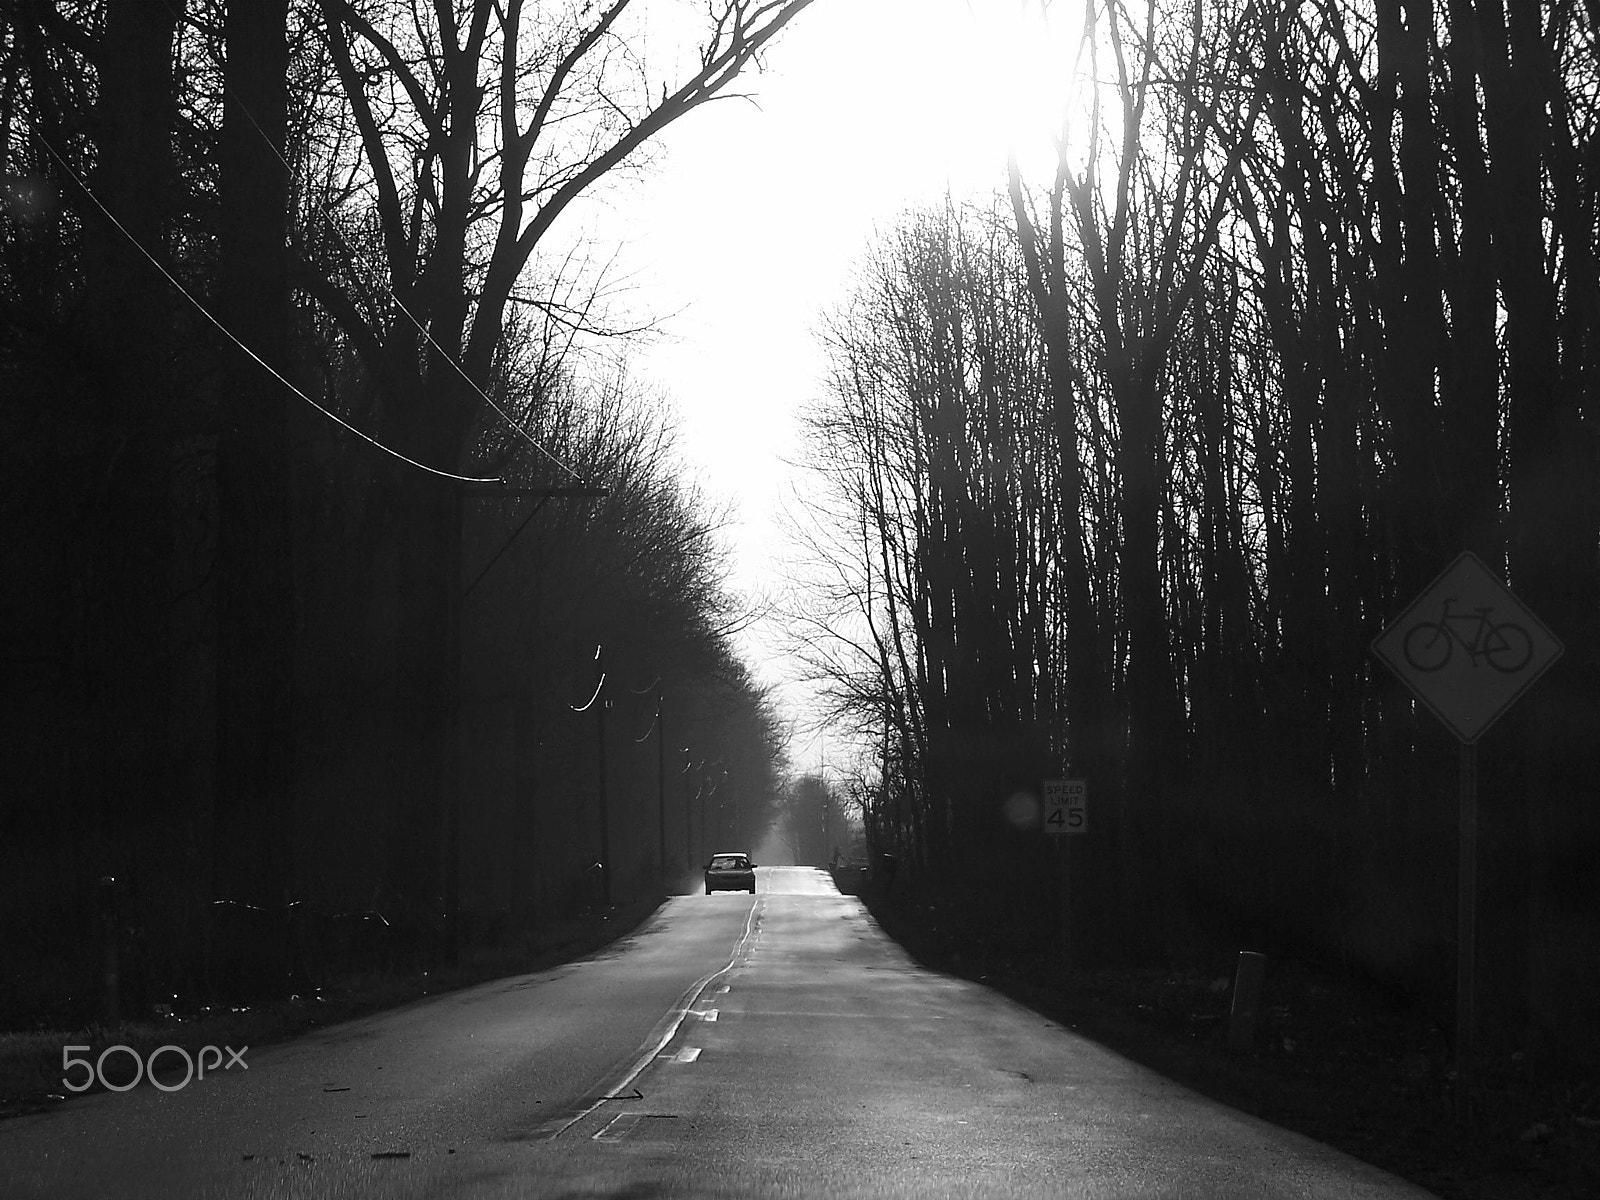 Kodak DX6490 ZOOM DIGITAL CAMERA sample photo. Road photography